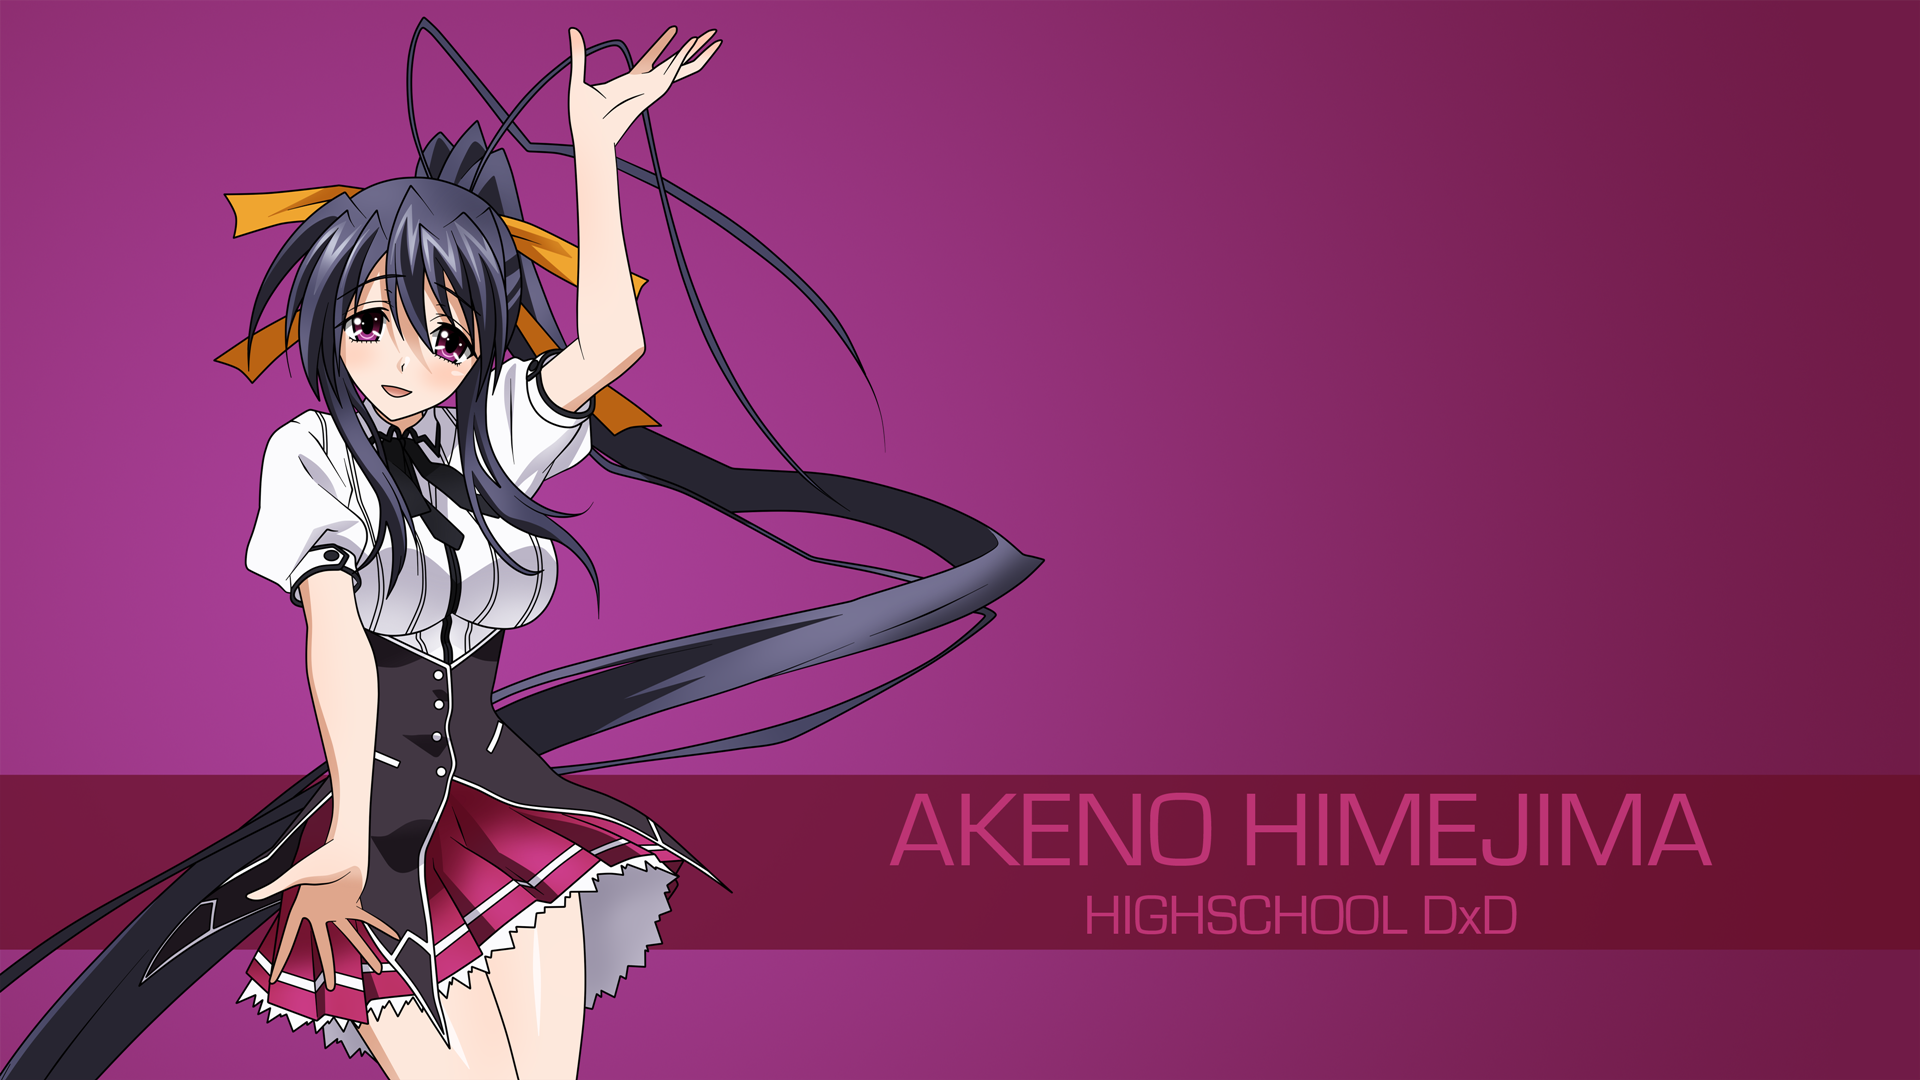 Anime 1920x1080 High School DxD Himejima Akeno anime girls anime arms up purple background gradient